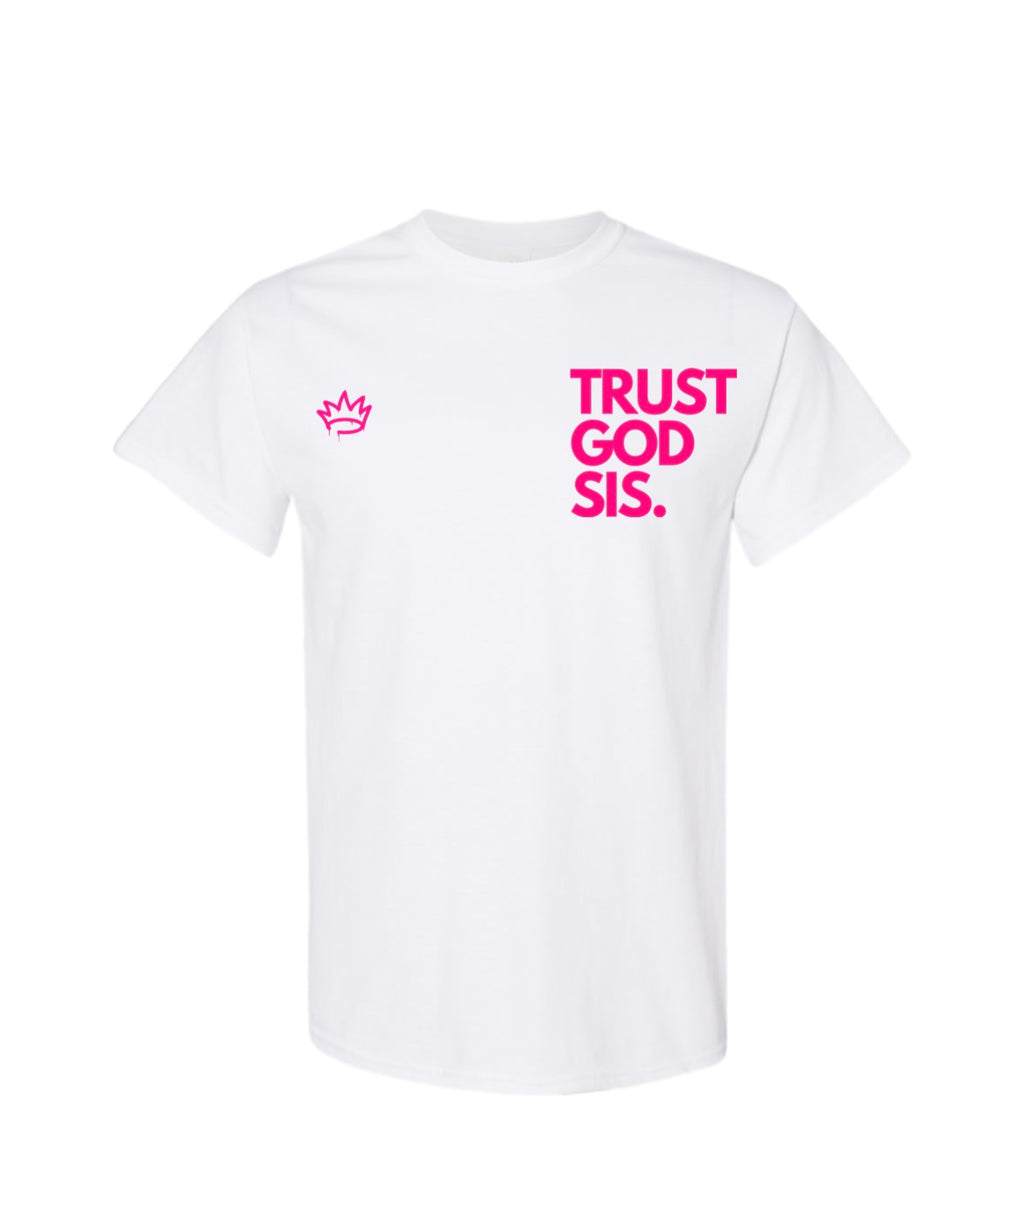 TRUST GOD SIS